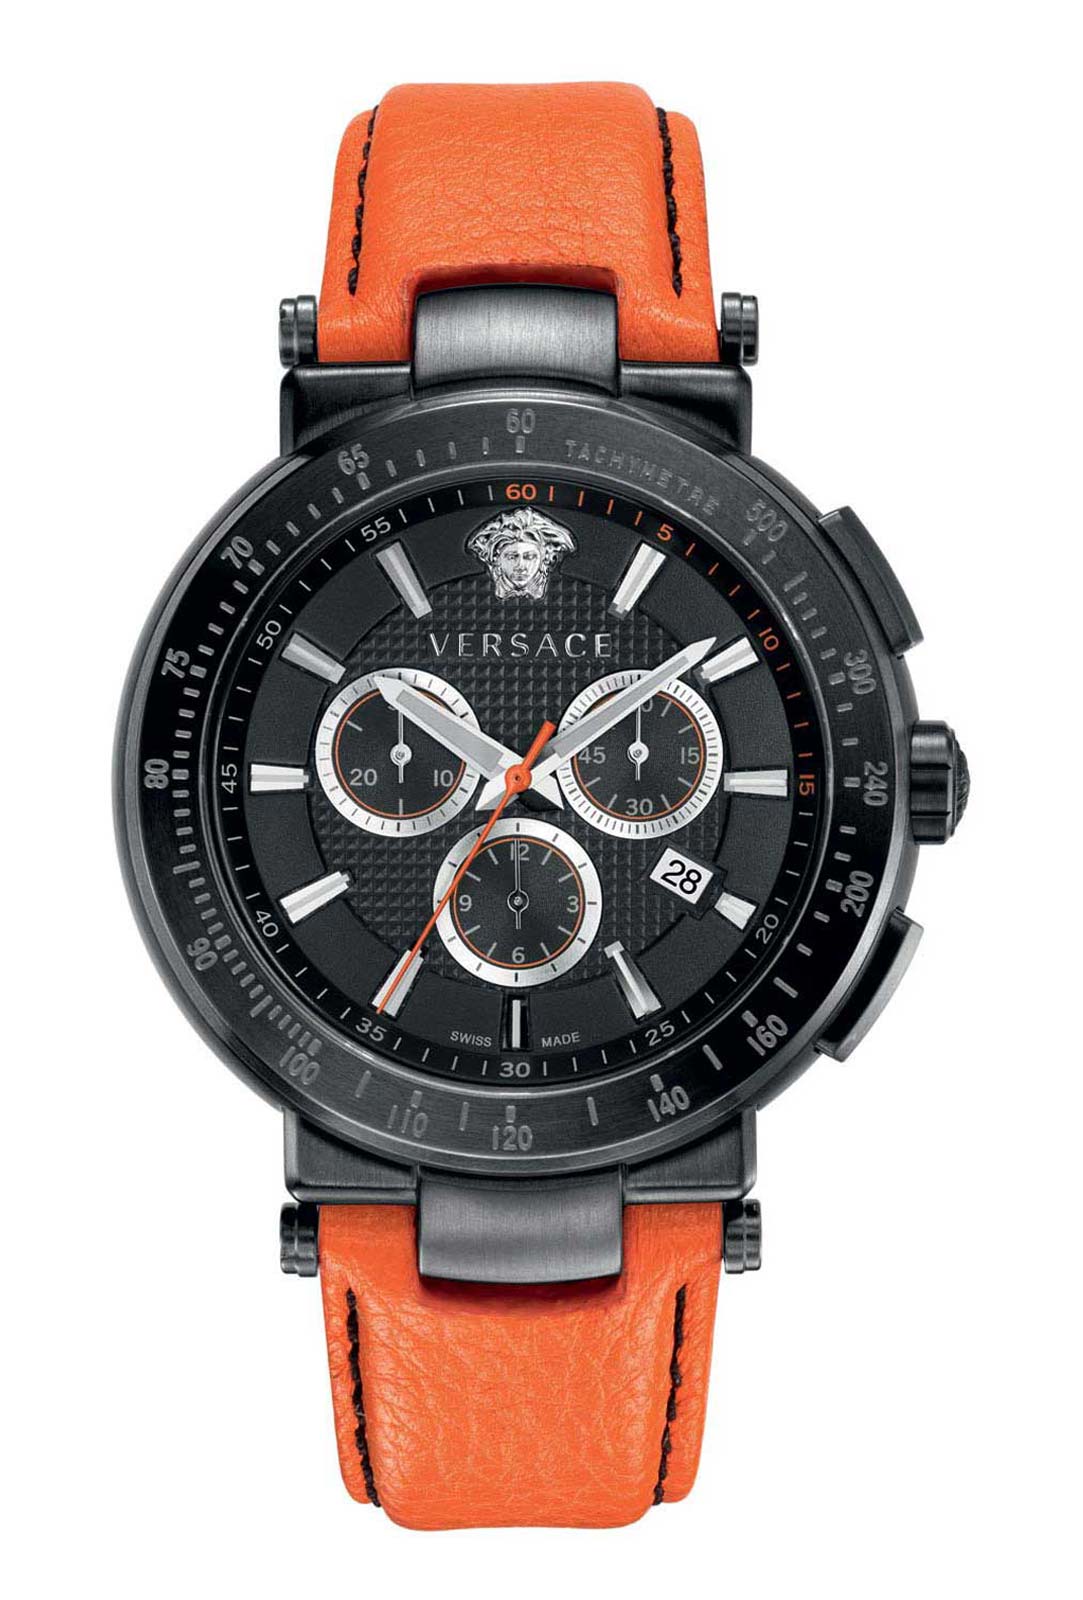 Versace QUARTZ CHRONO watch 5030D STEEL BLACK - Click Image to Close